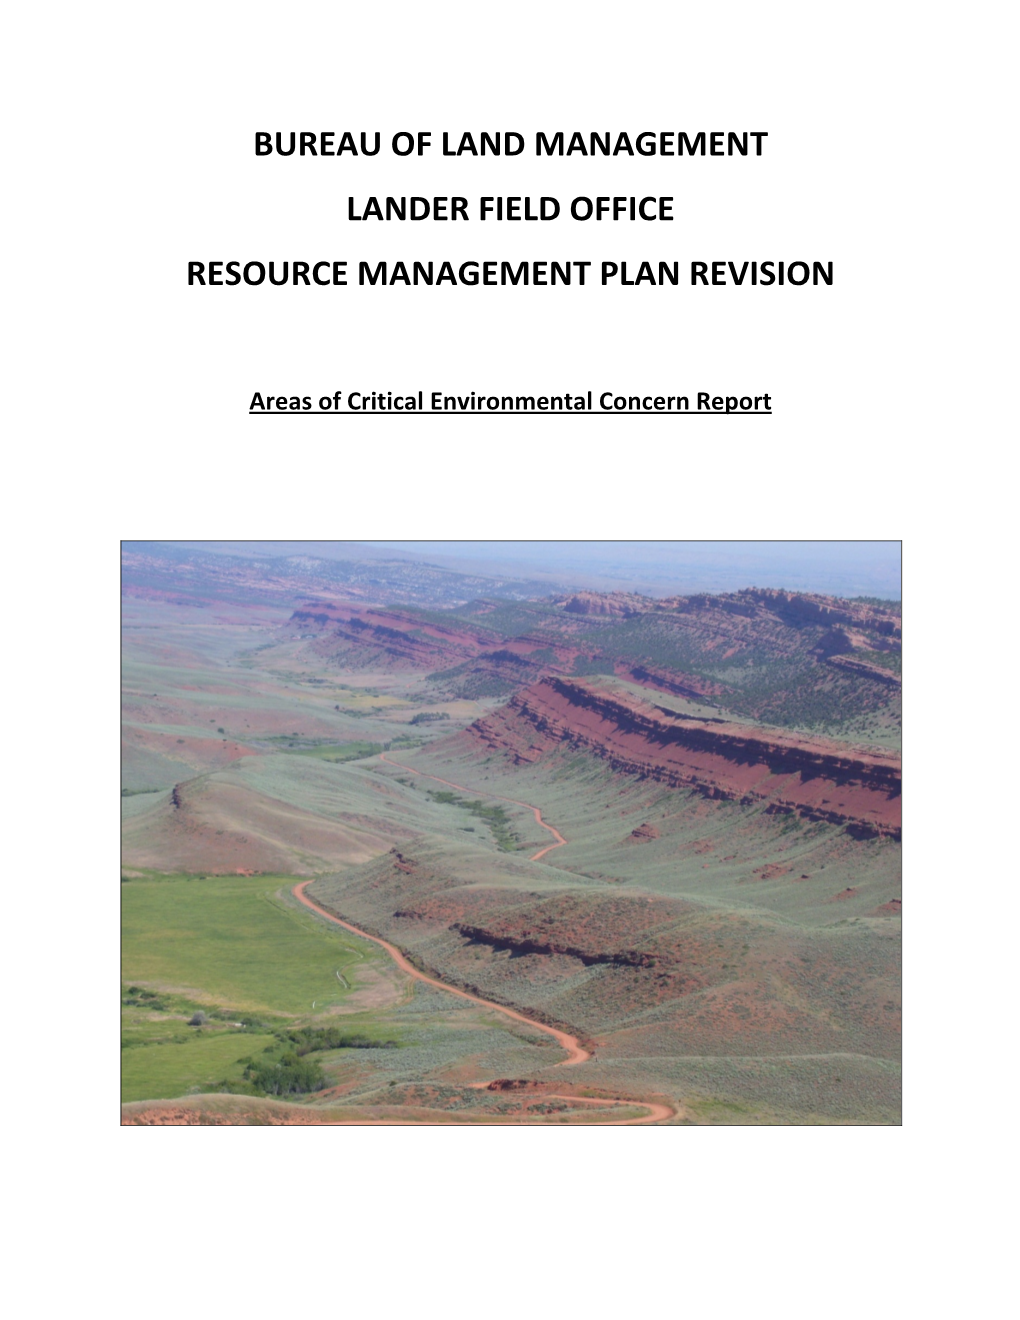 Bureau of Land Management Lander Field Office Resource Management Plan Revision